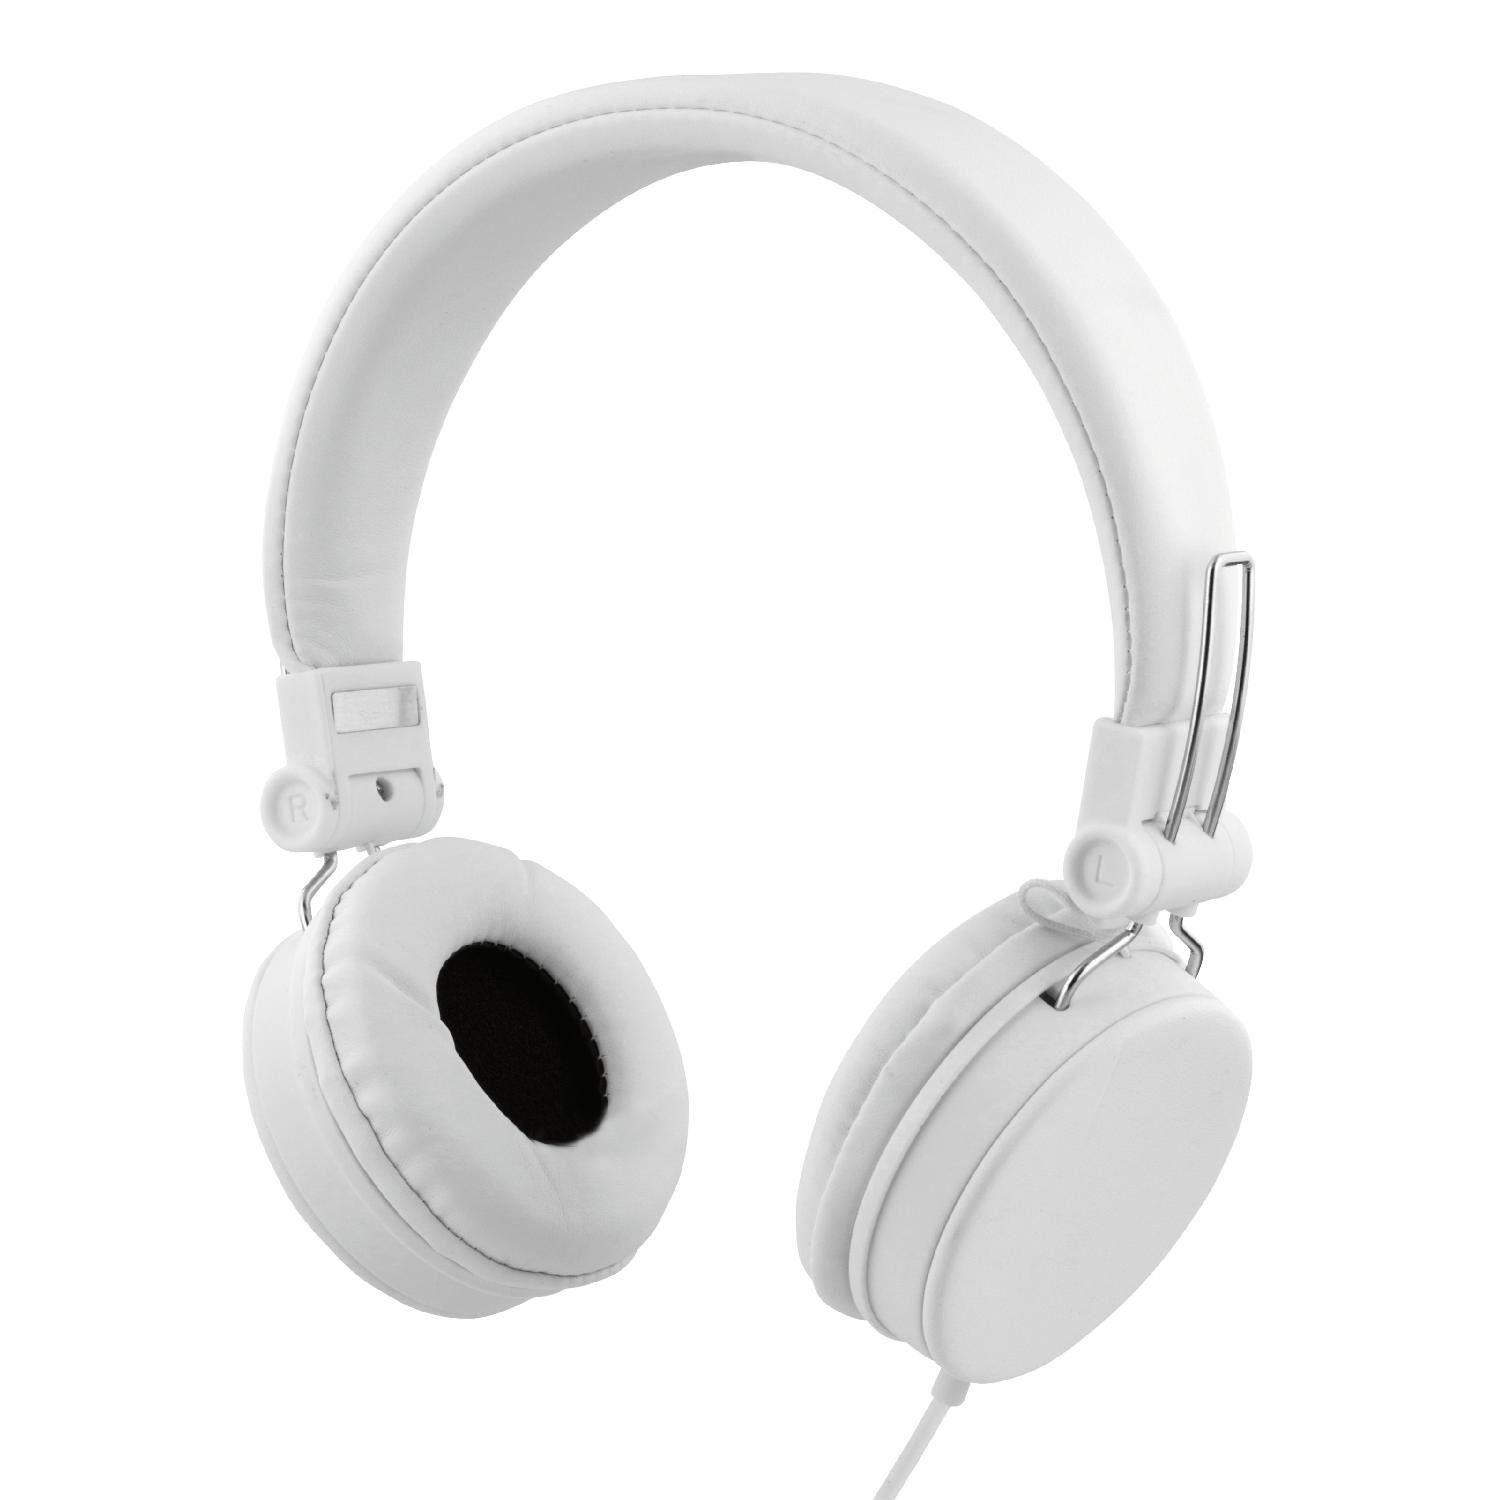 Jahre 5 1,2m weiß (integriertes Ohrpolster Kabel 3.5mm Mikrofon, Klinkenanschluss Herstellergarantie) On-Ear-Kopfhörer inkl. Kopfhörer Headset, faltbares STREETZ